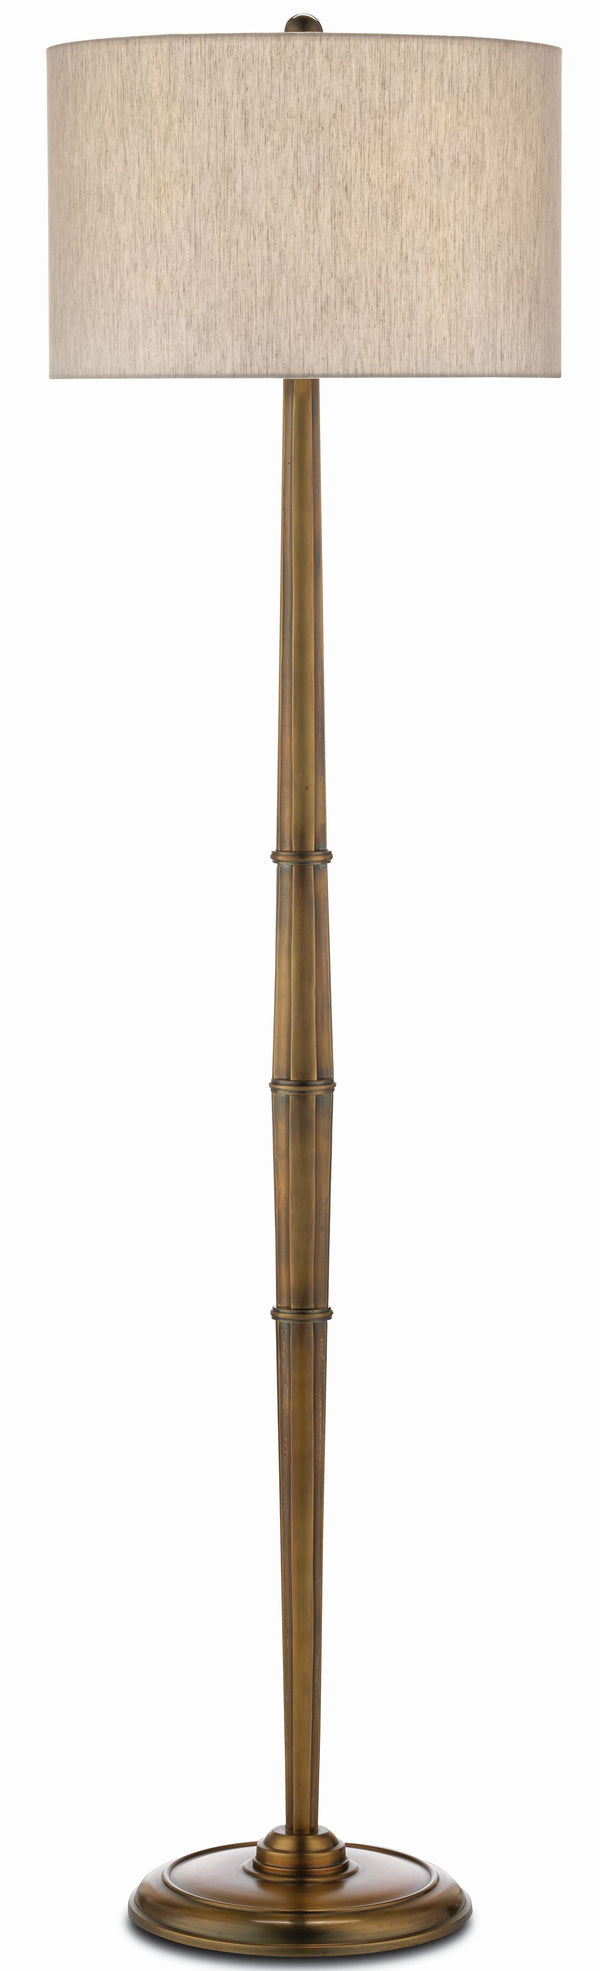 Harrelson Brass Floor Lamp